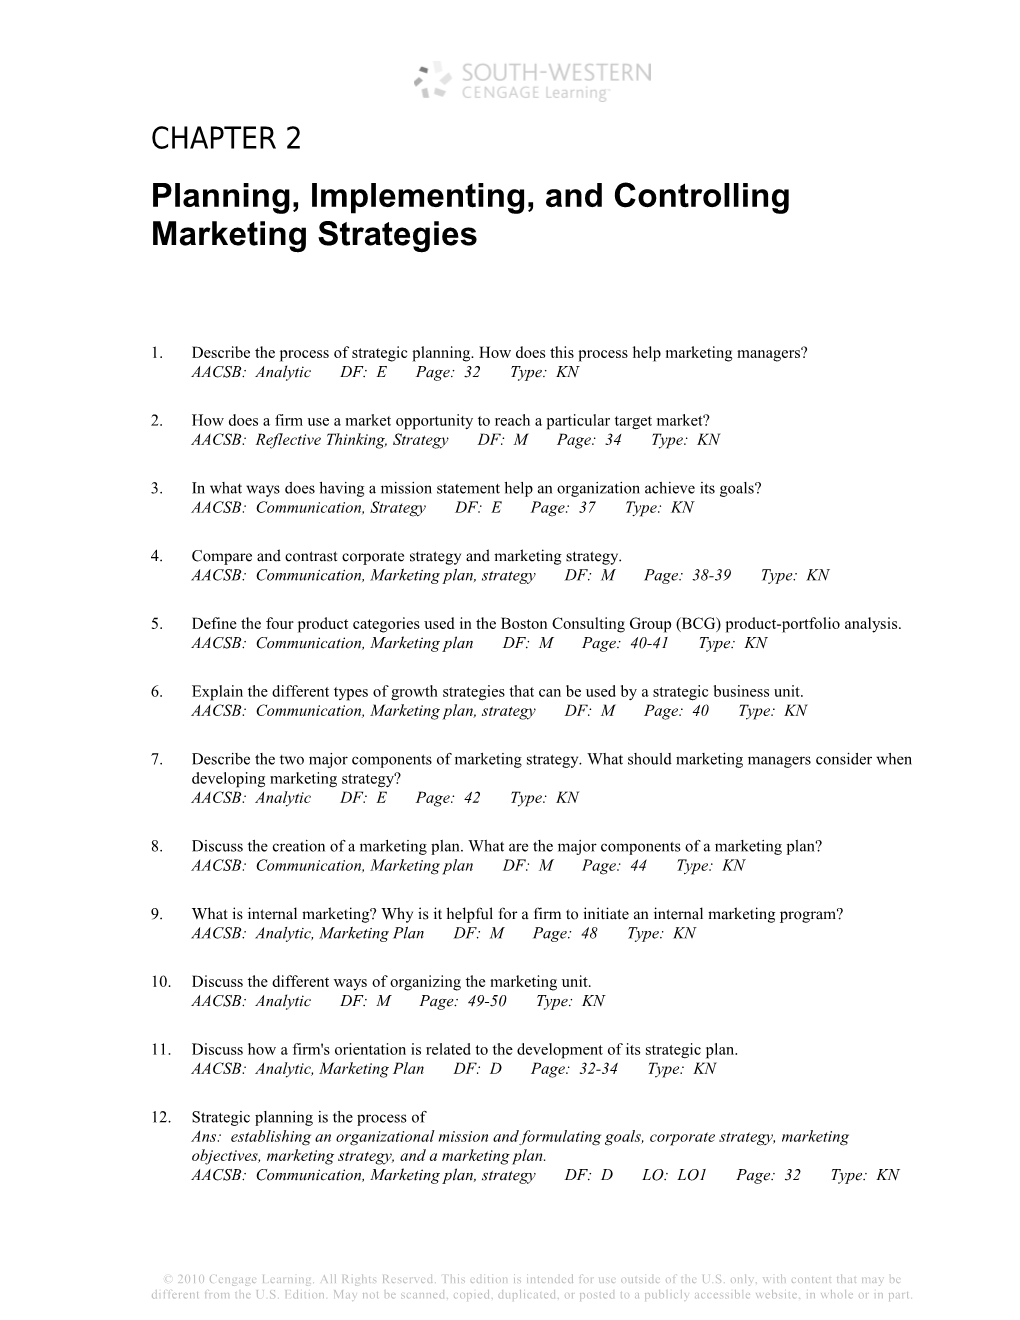 Planning,Implementing,Andcontrollingmarketingstrategies